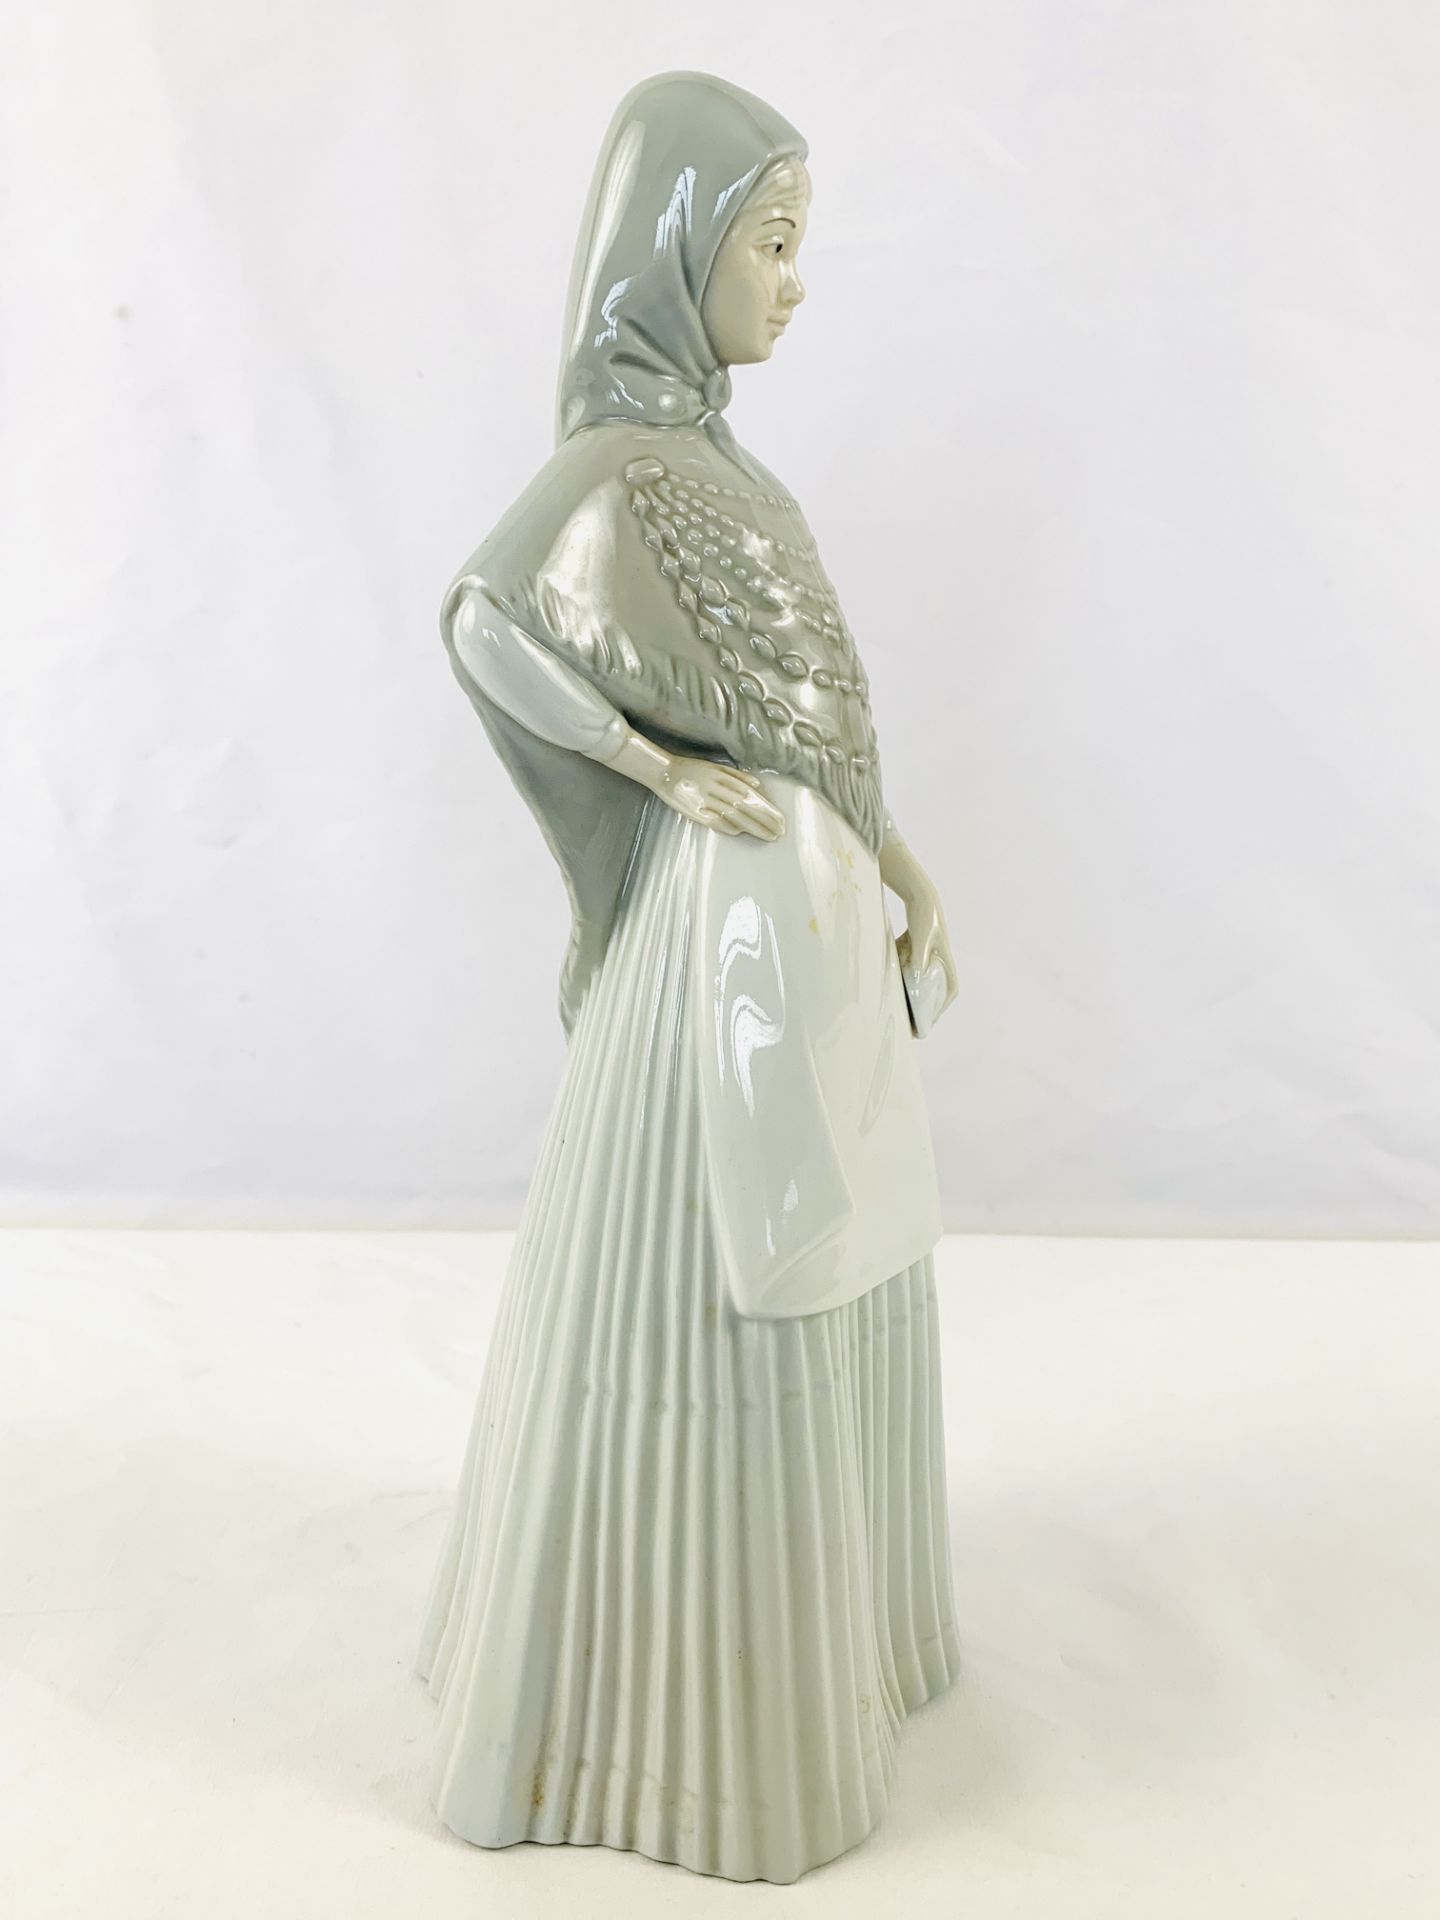 Figure of a woman by Porcelanas Miquel Requena SA, Cuart de Poblet - Image 2 of 3